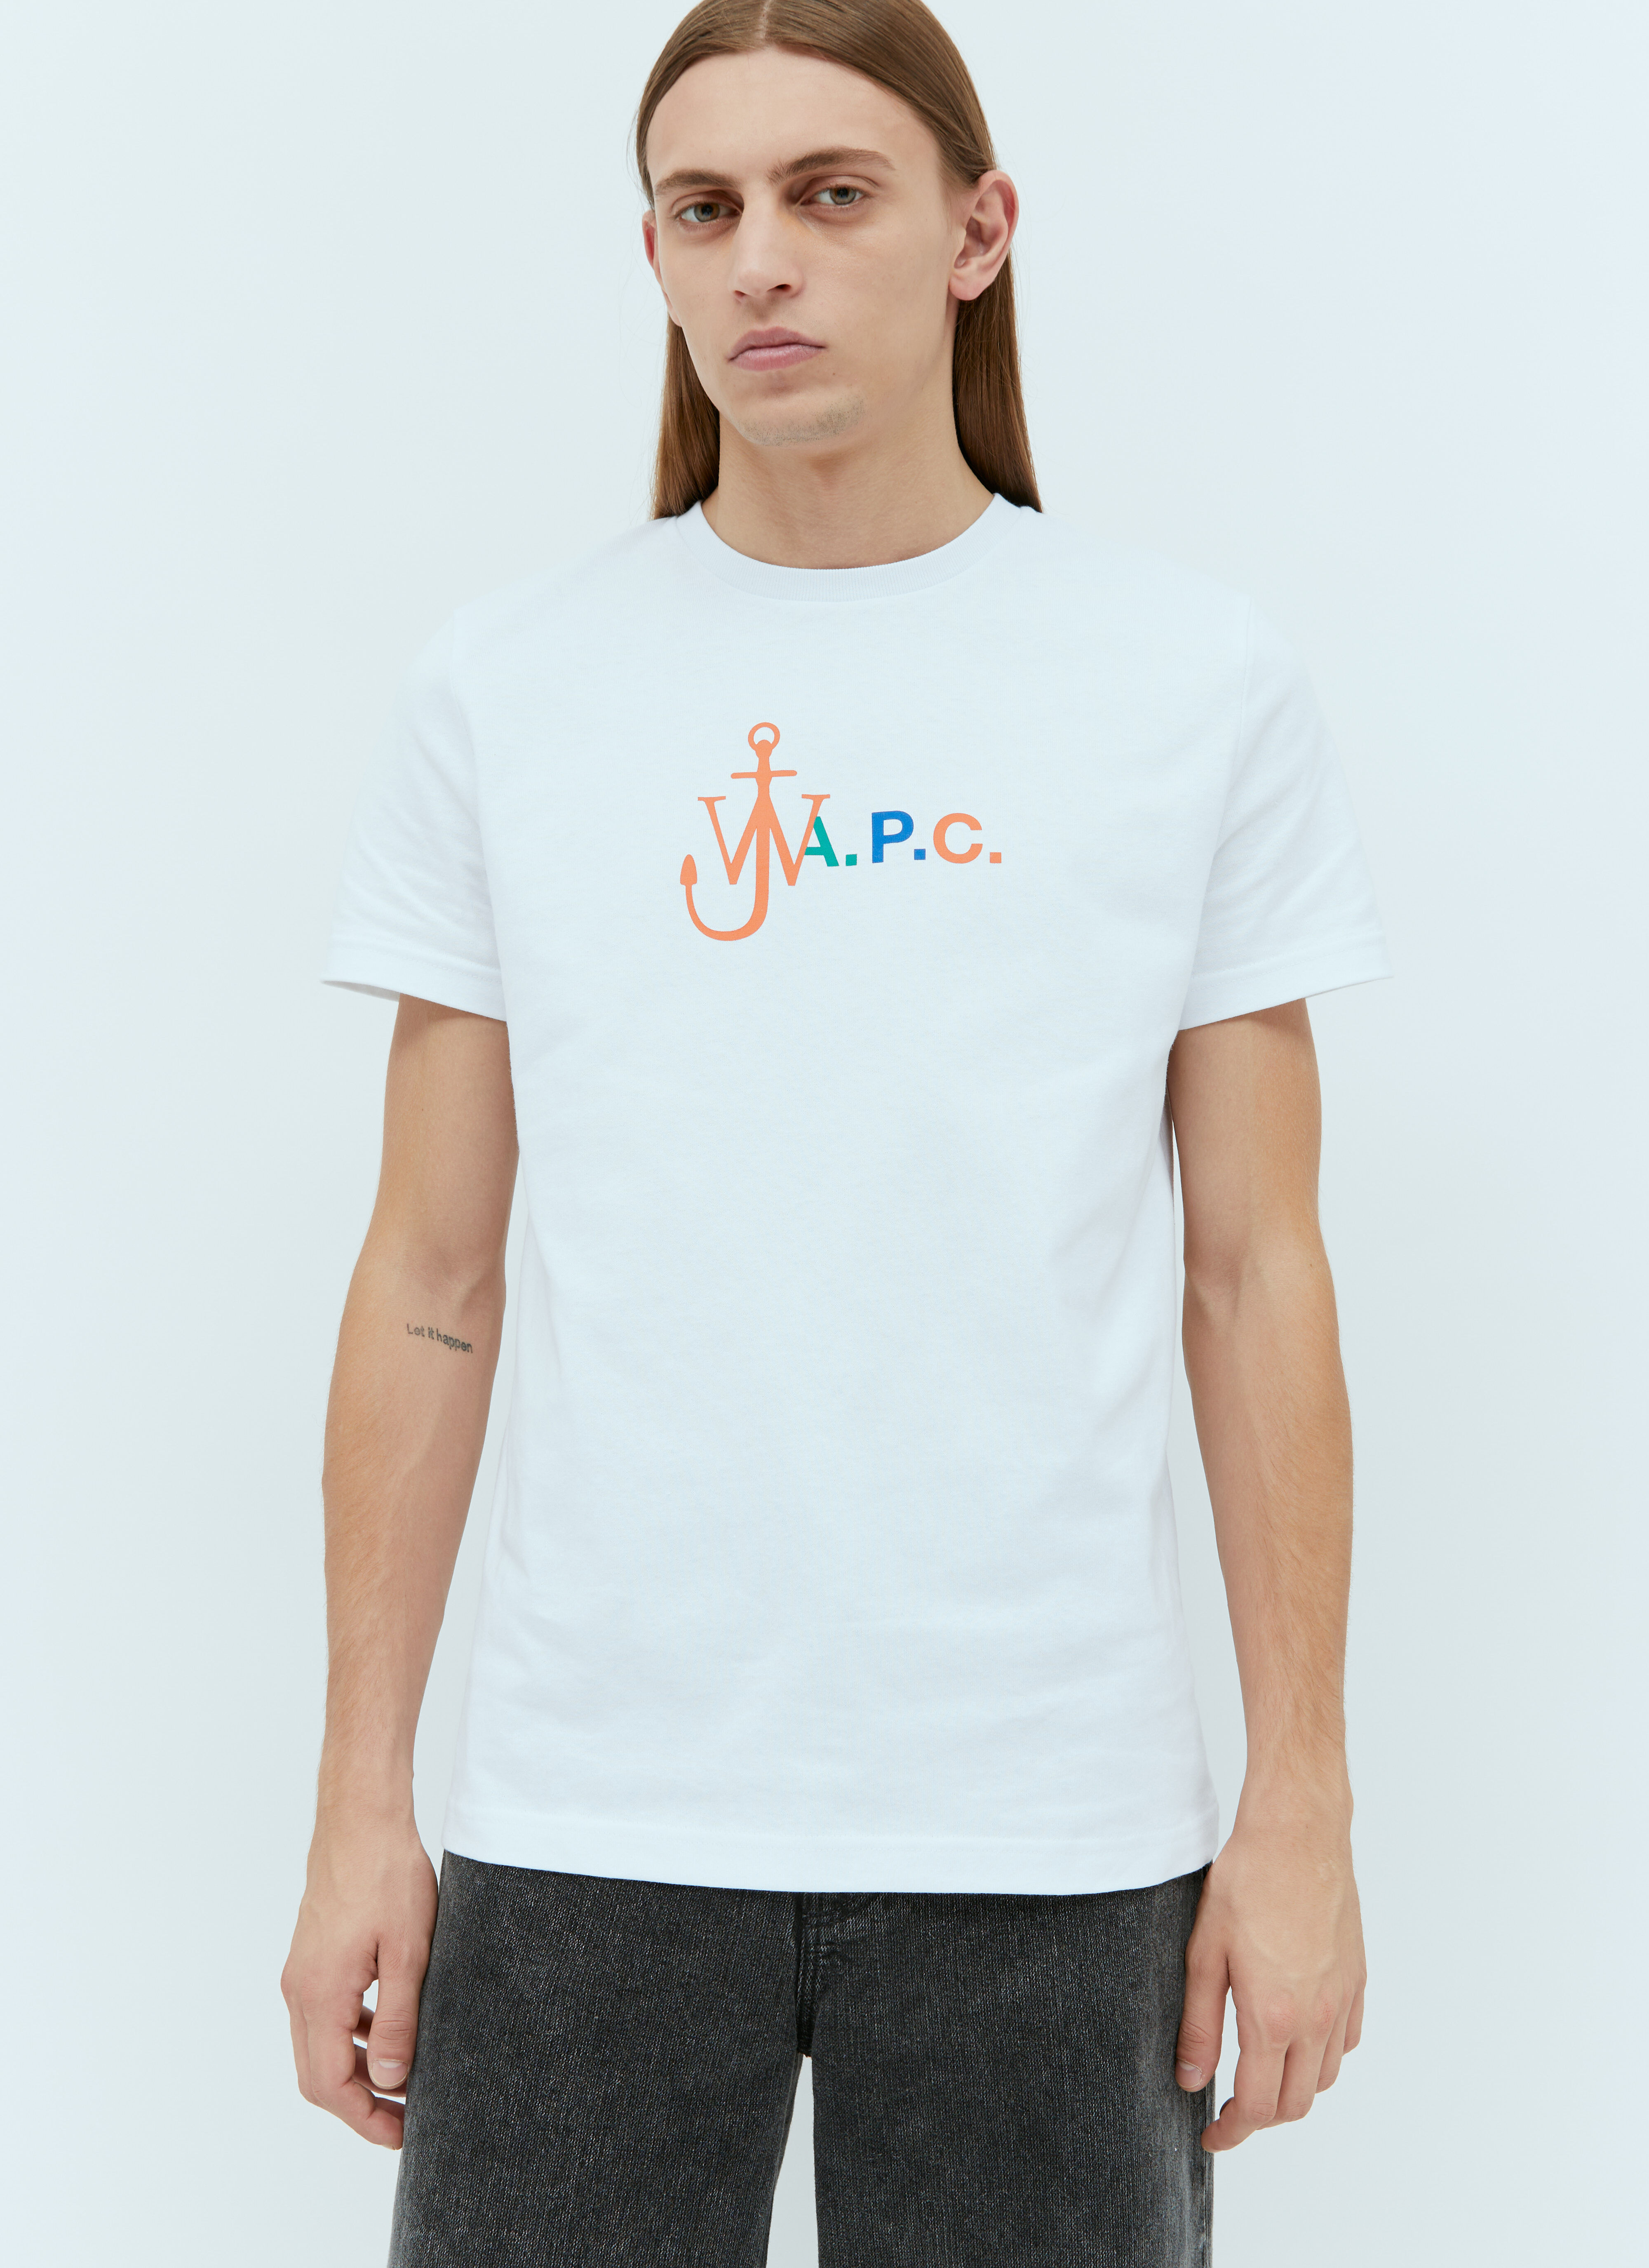 A.P.C. x JWA 앵커 티셔츠 그린 apc0156004